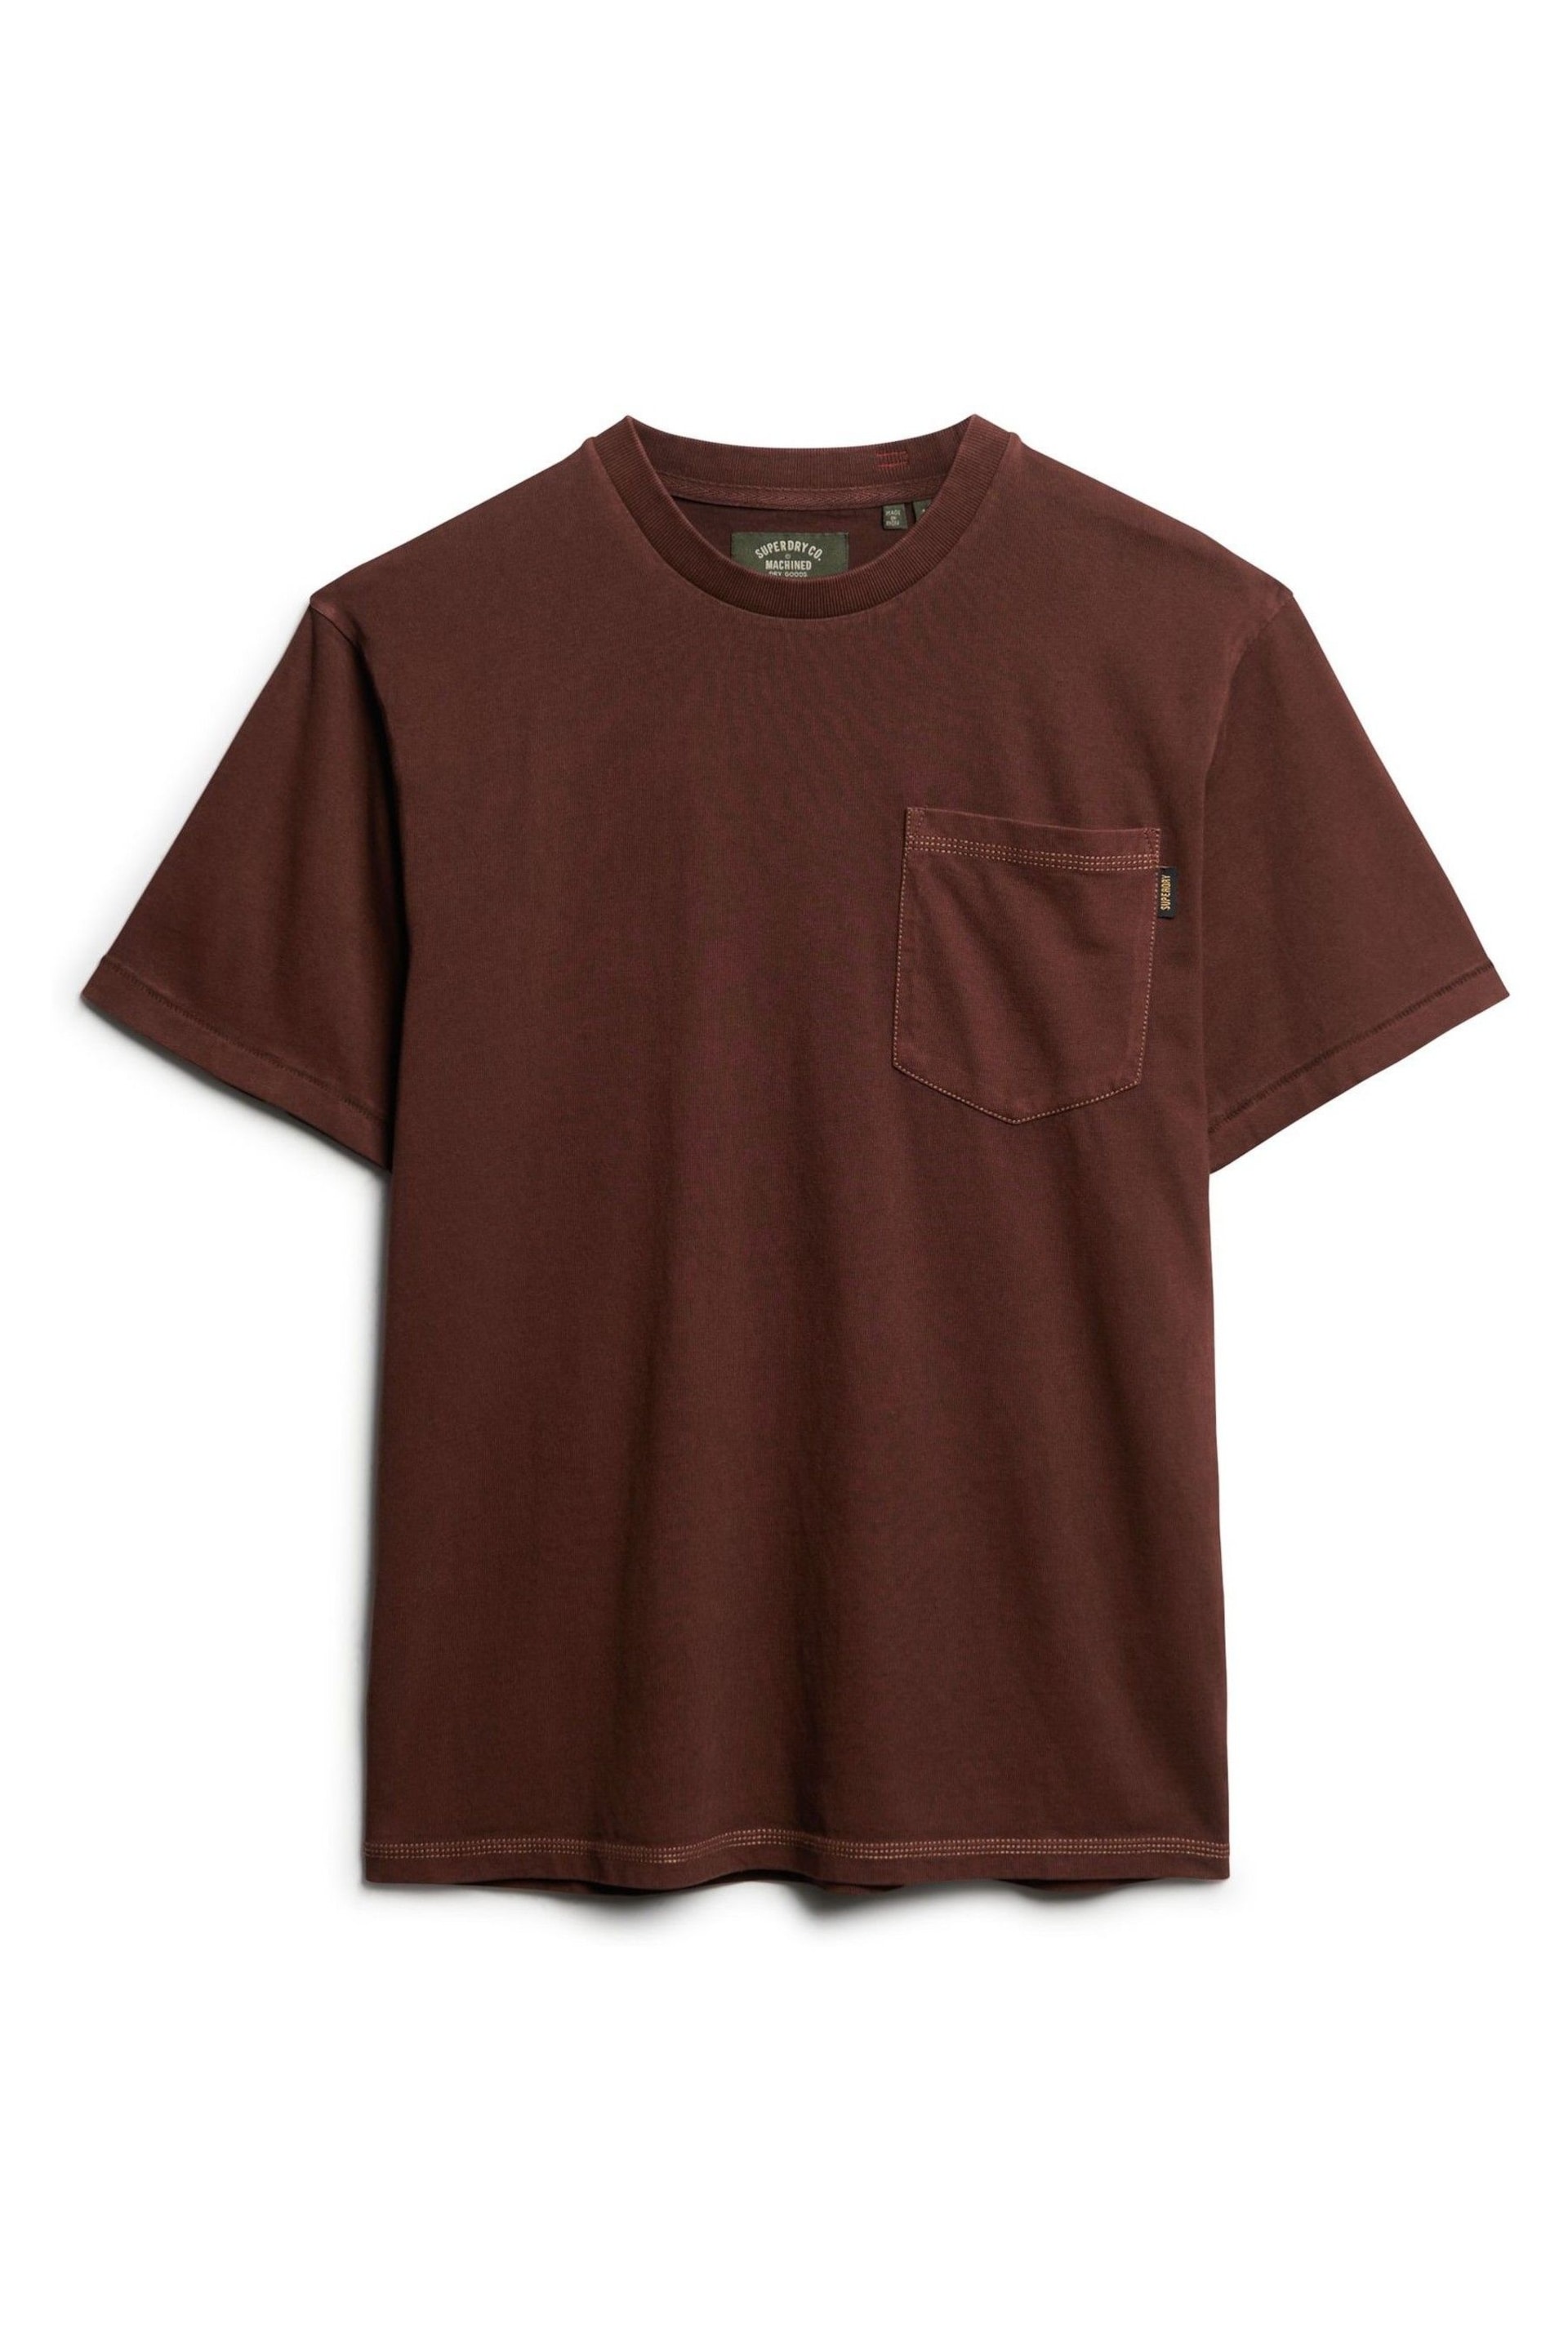 Superdry Brown Contrast Stitch Pocket T-Shirt - Image 4 of 7